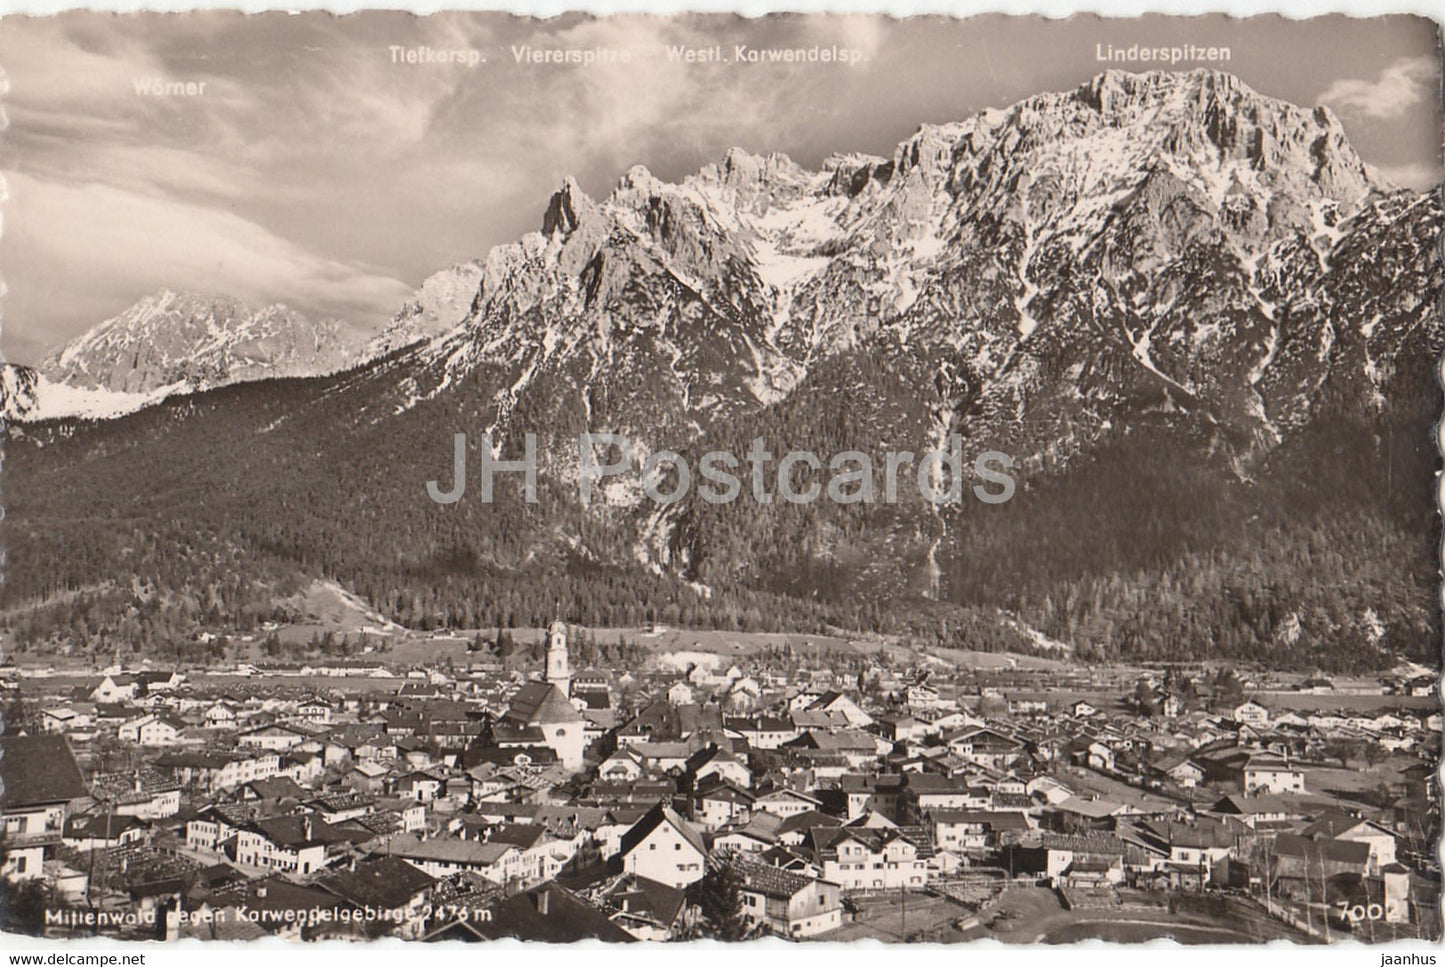 Mittenwald gegen Karwendelgebirge 2476 m - old postcard - 1954 - Germany - used - JH Postcards